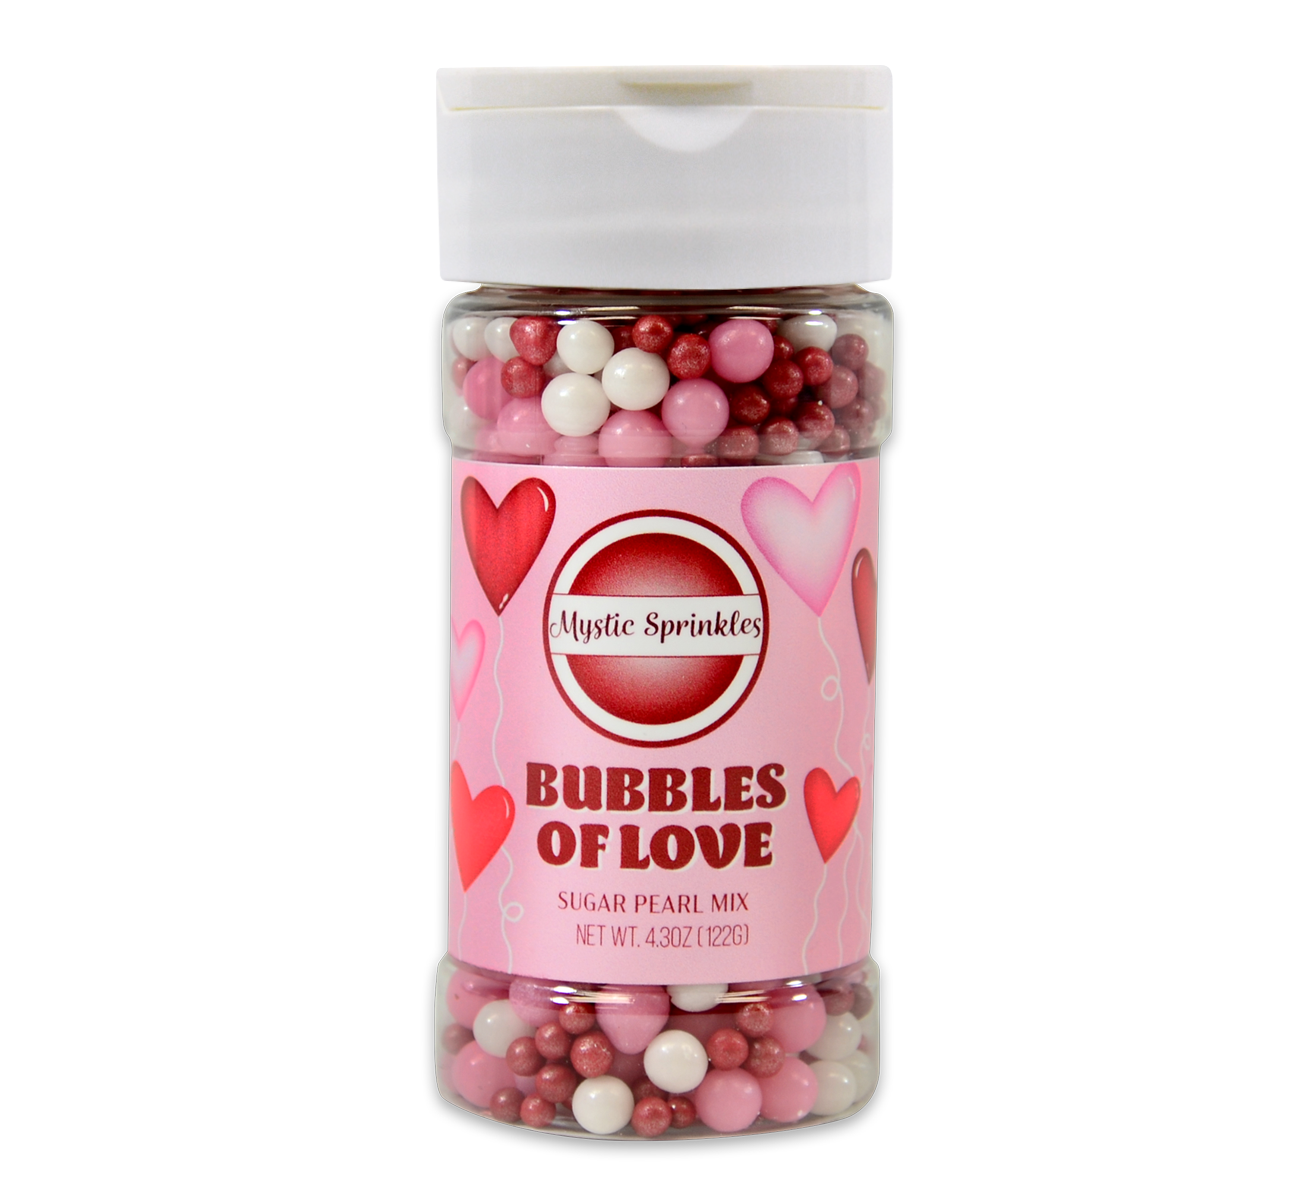 Bubbles of Love Sugar Pearl Mix 4.3oz Bottle